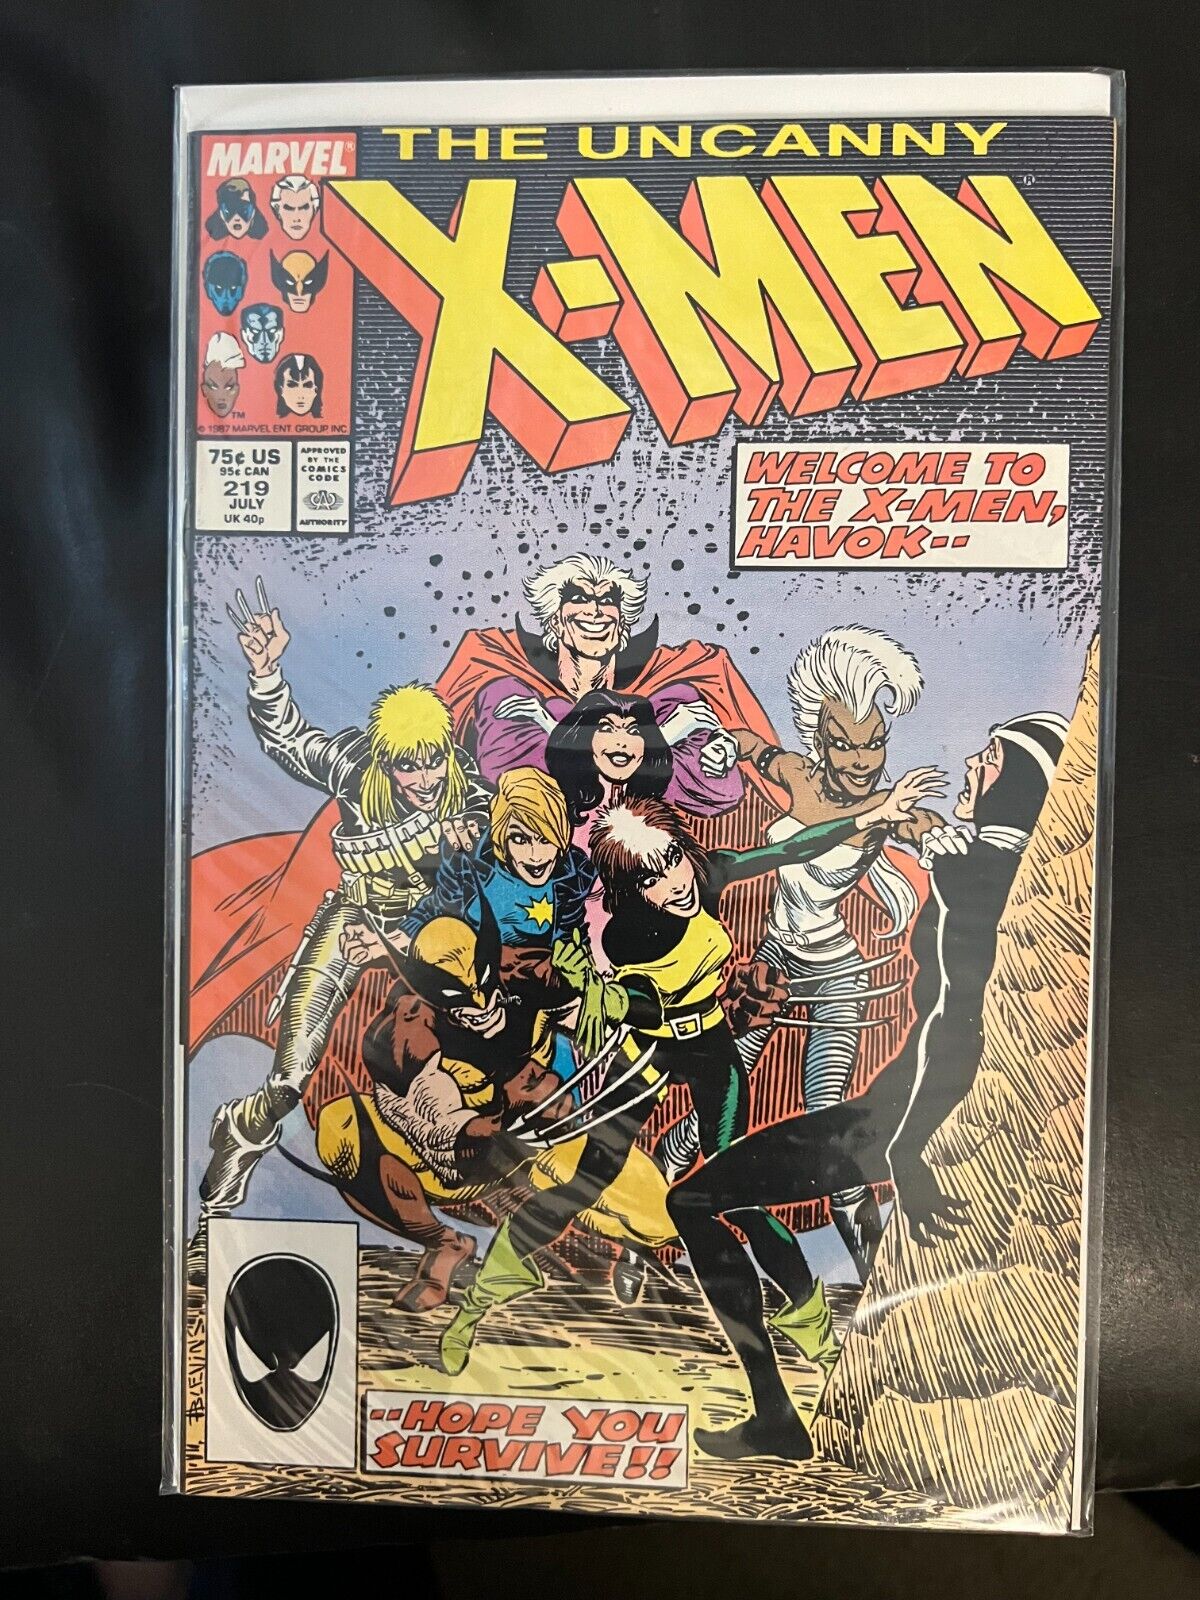 REDUCED FOR QUICK SALE Lot of 3 Marvel Comics The Uncanny X-Men #219. #220, #223